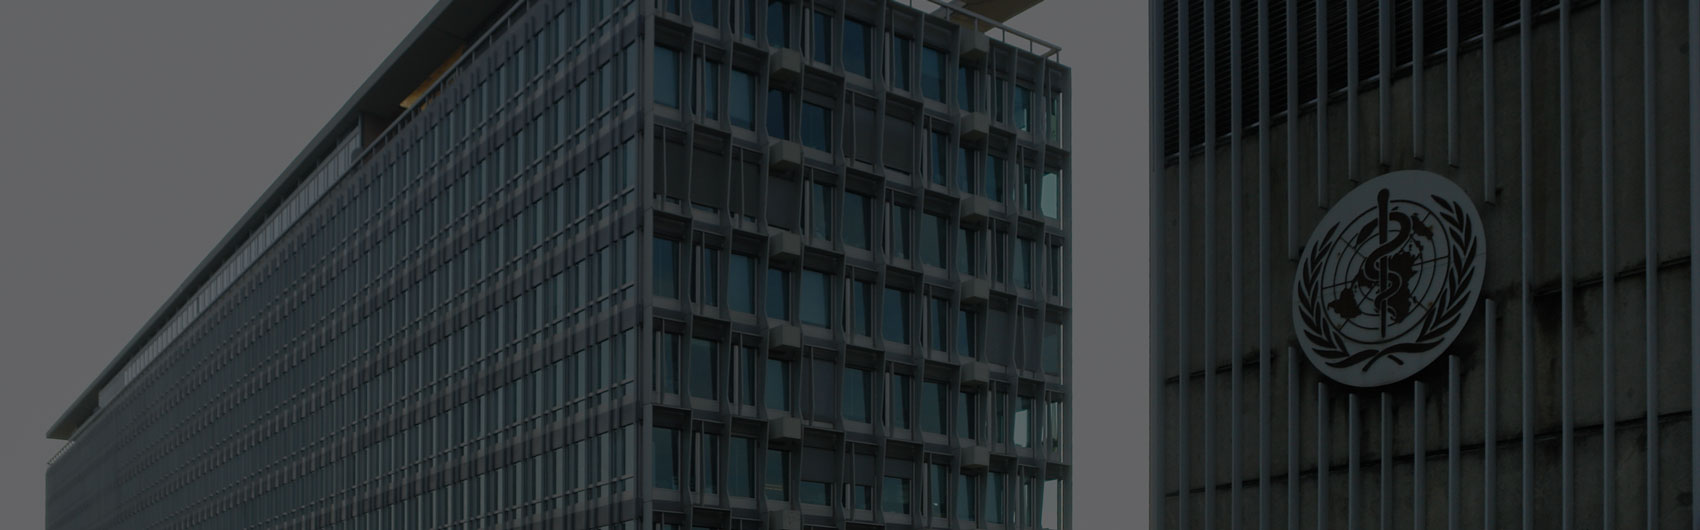 Buildings of the World Health Organization headquarters